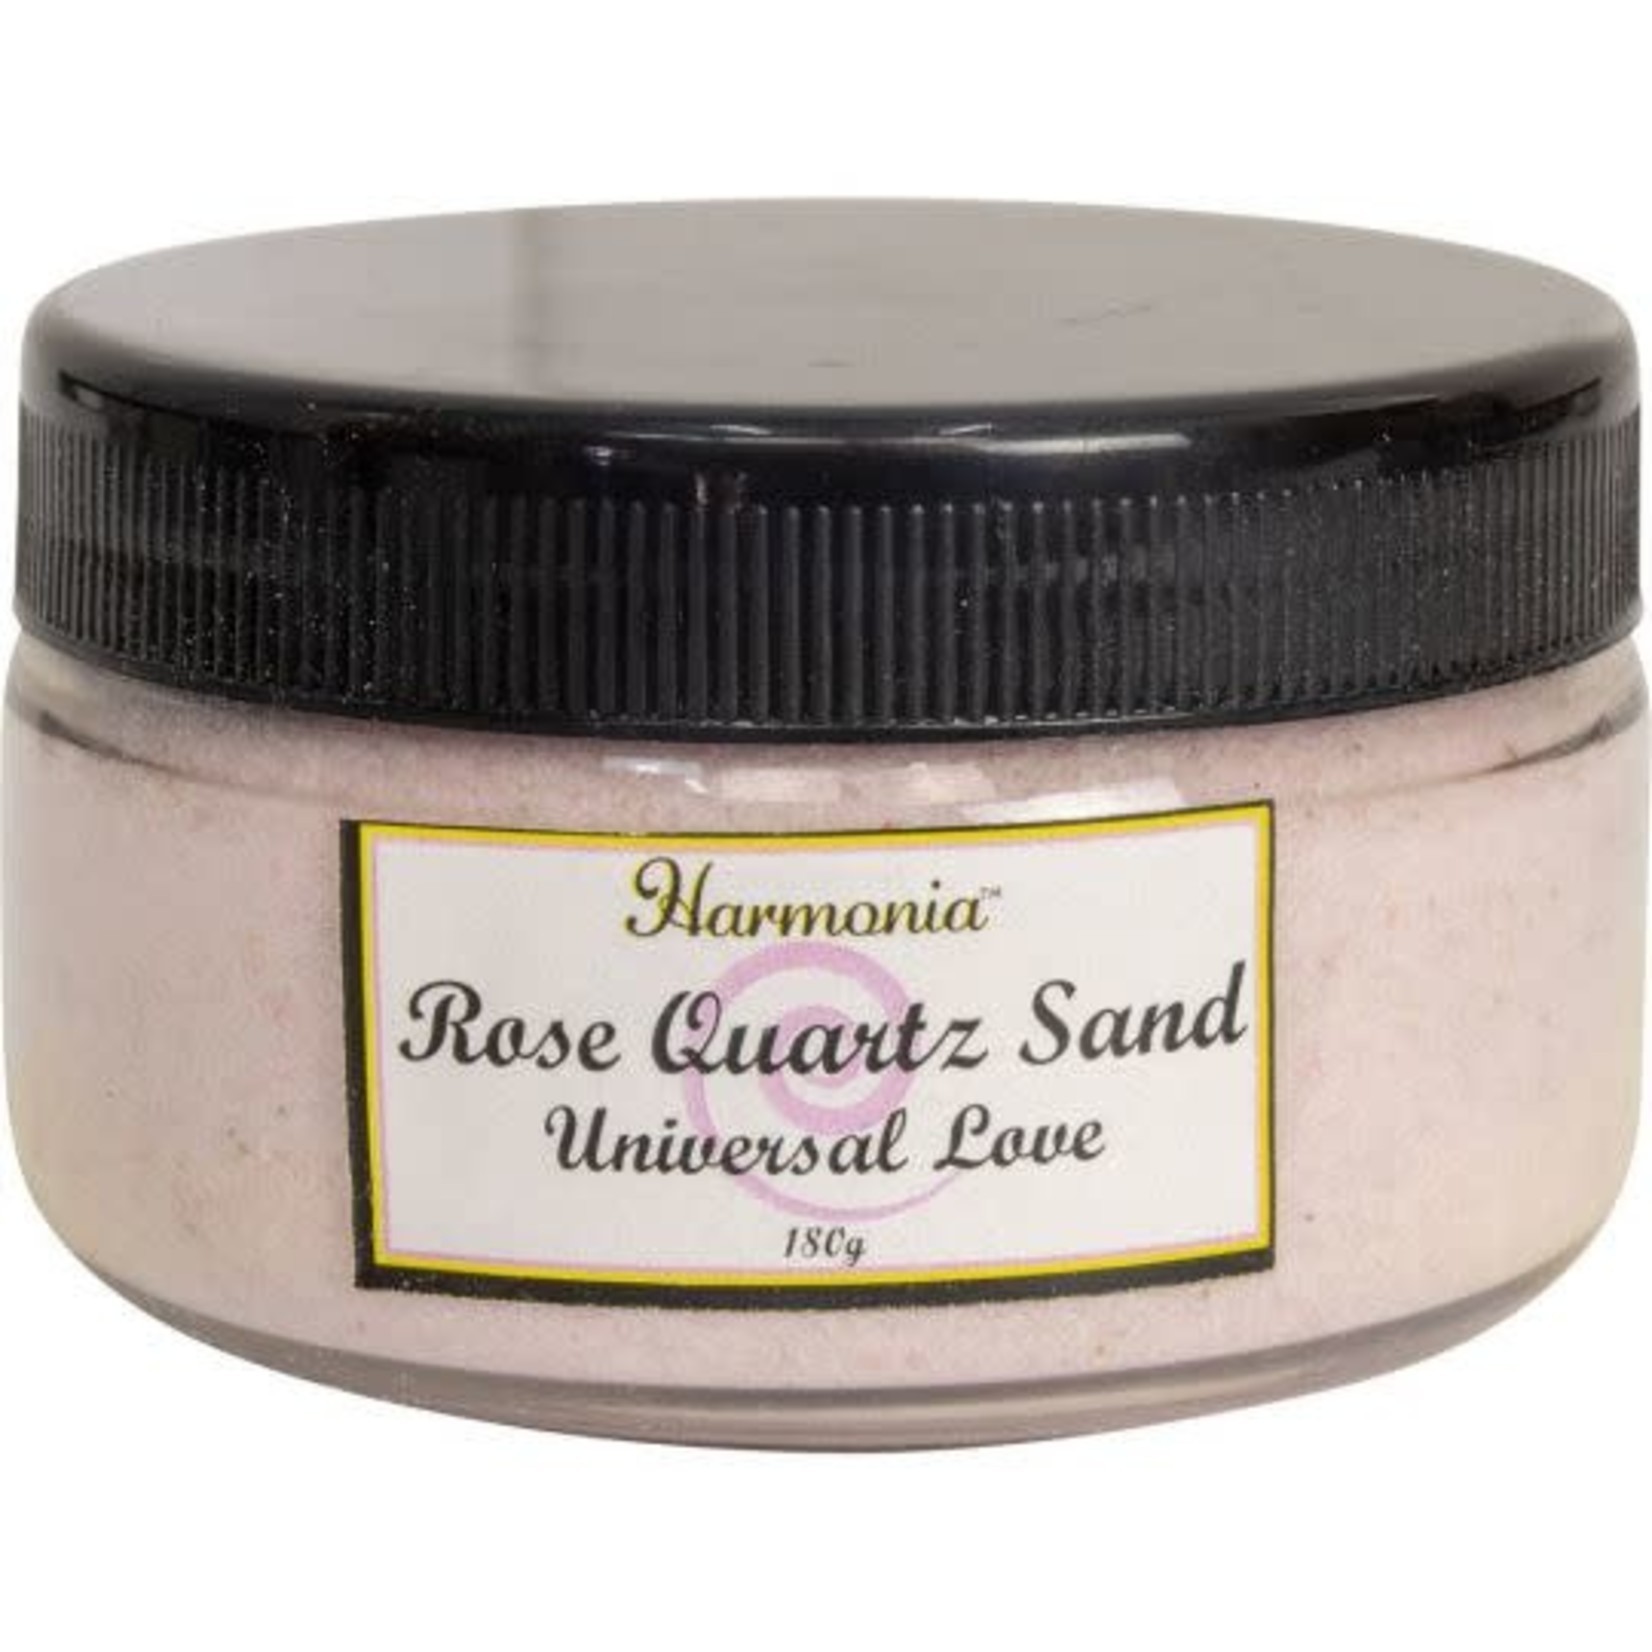 Rose Quartz Sand - Universal Love